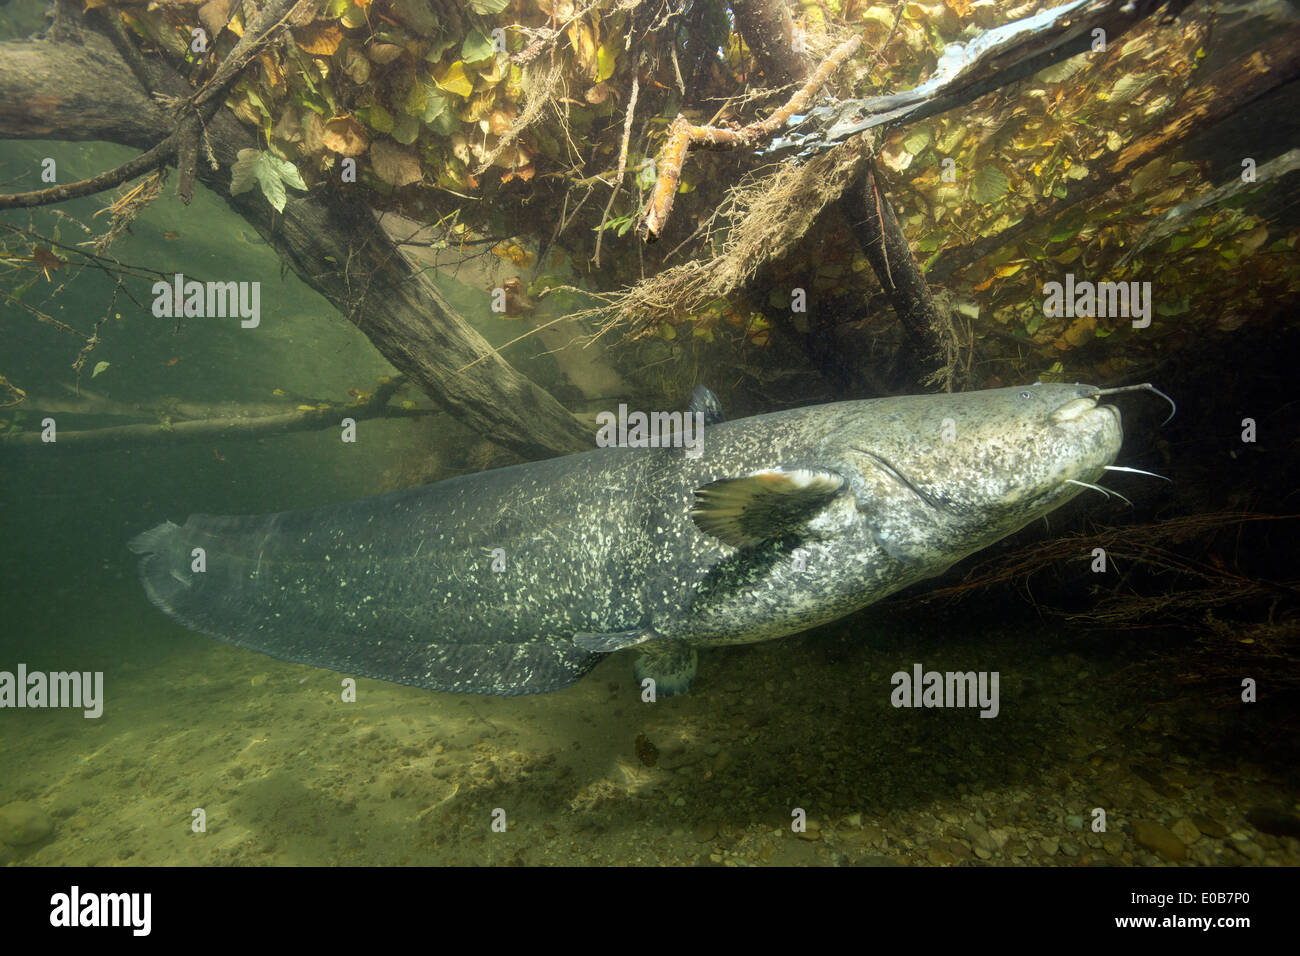 Germany, Bavaria, Wels catfish, Silurus glandis, in river Alz Stock Photo